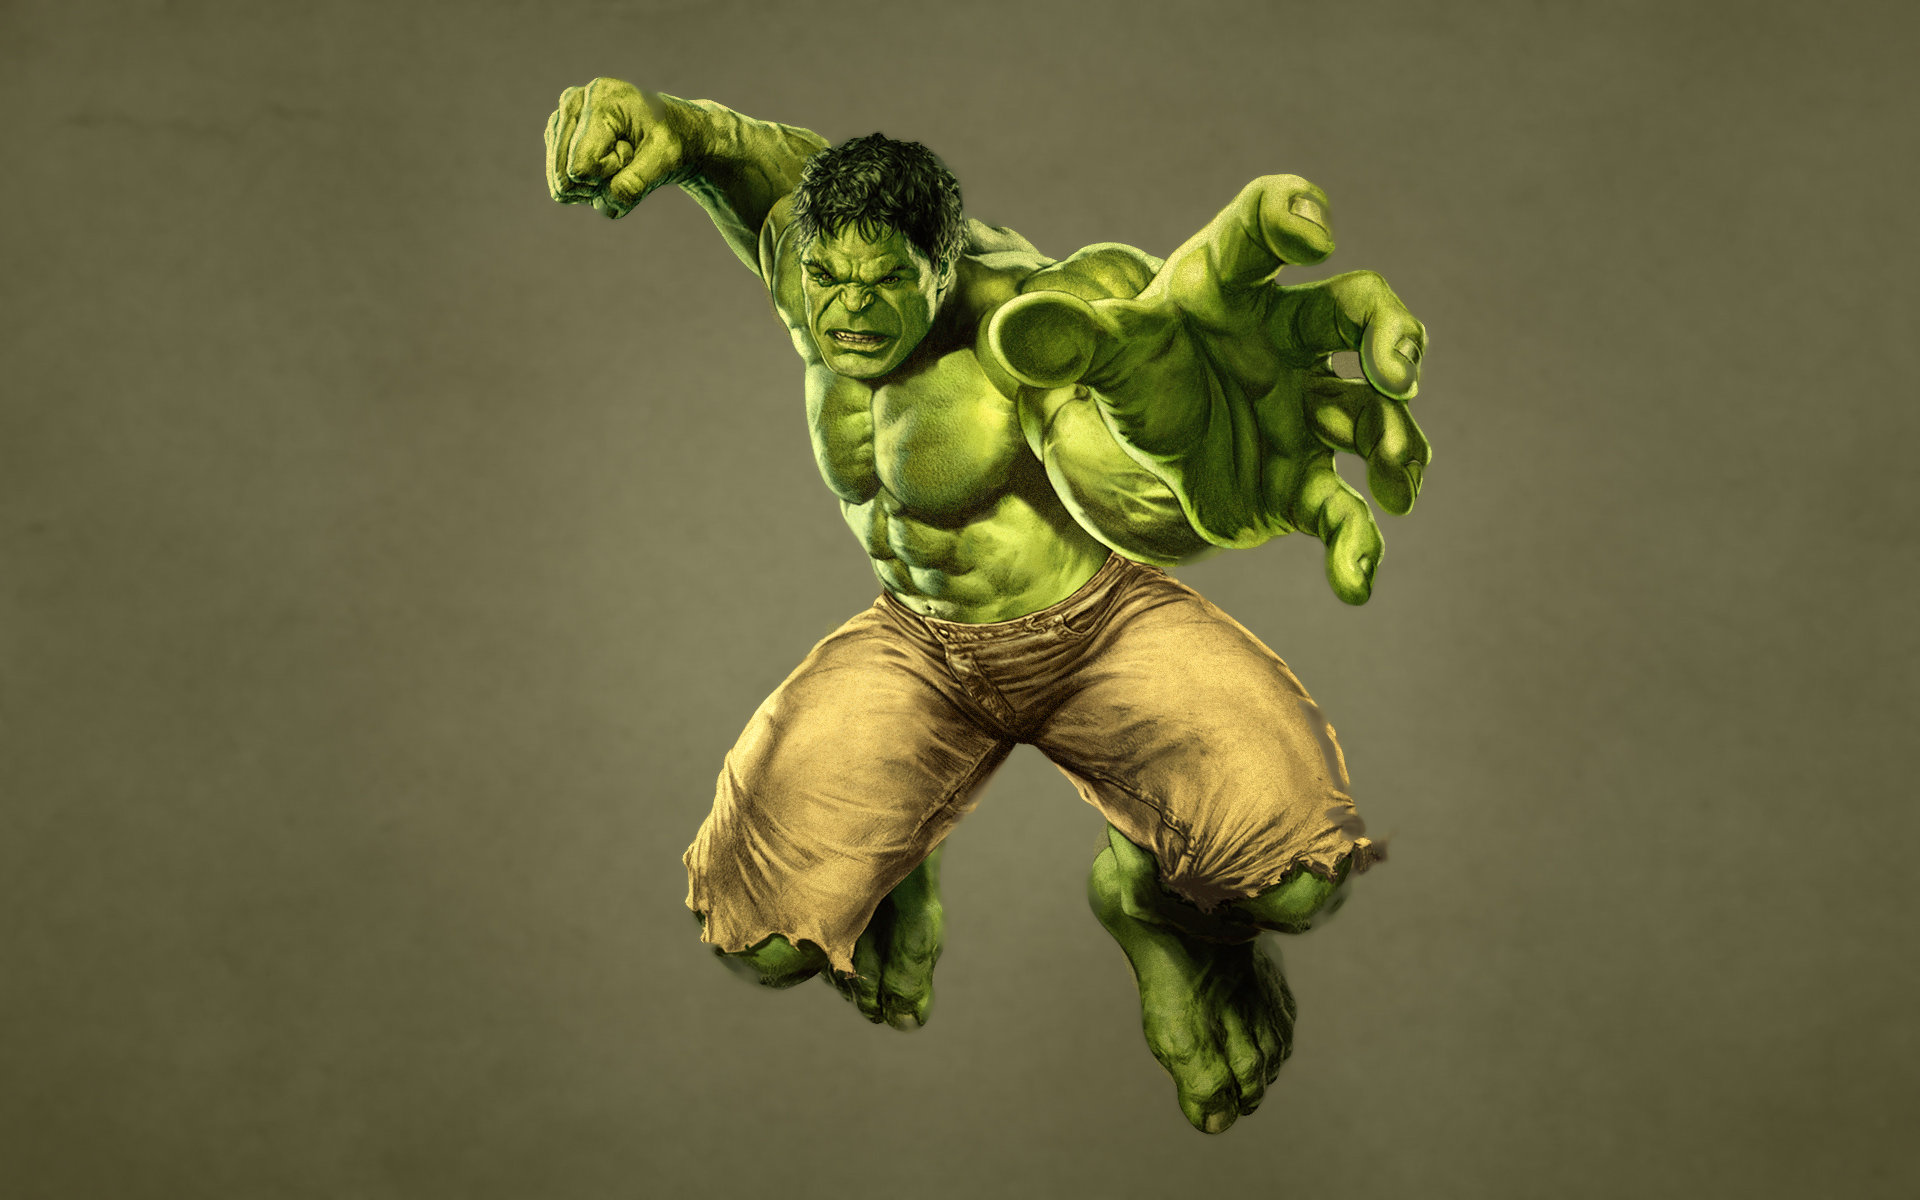 hulk wallpaper,hulk,fictional character,action figure,orc,superhero